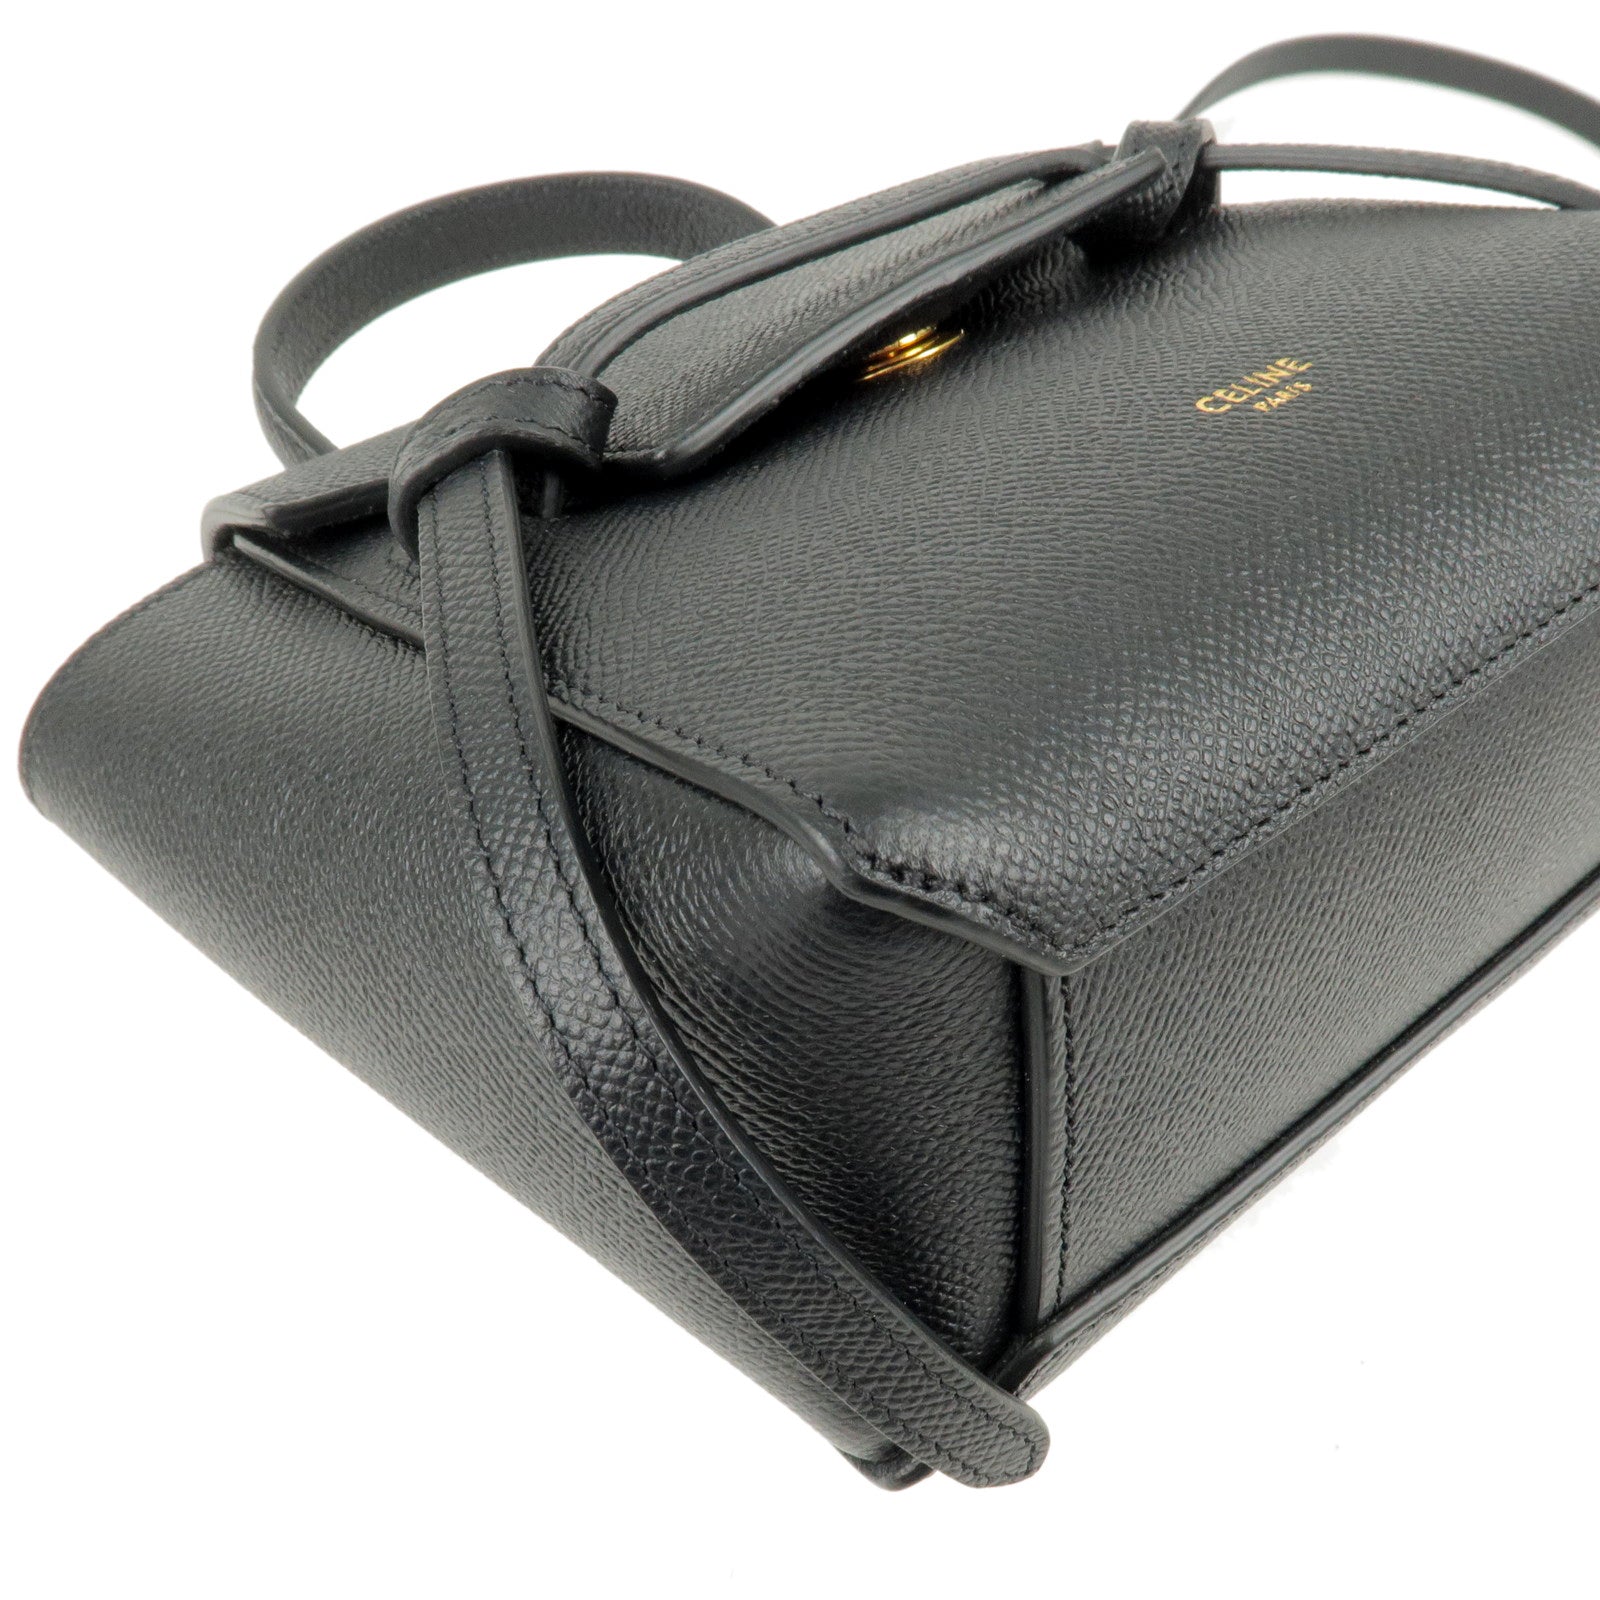 Pico - 2Way - 194263 – Celine Belt medium model handbag in black